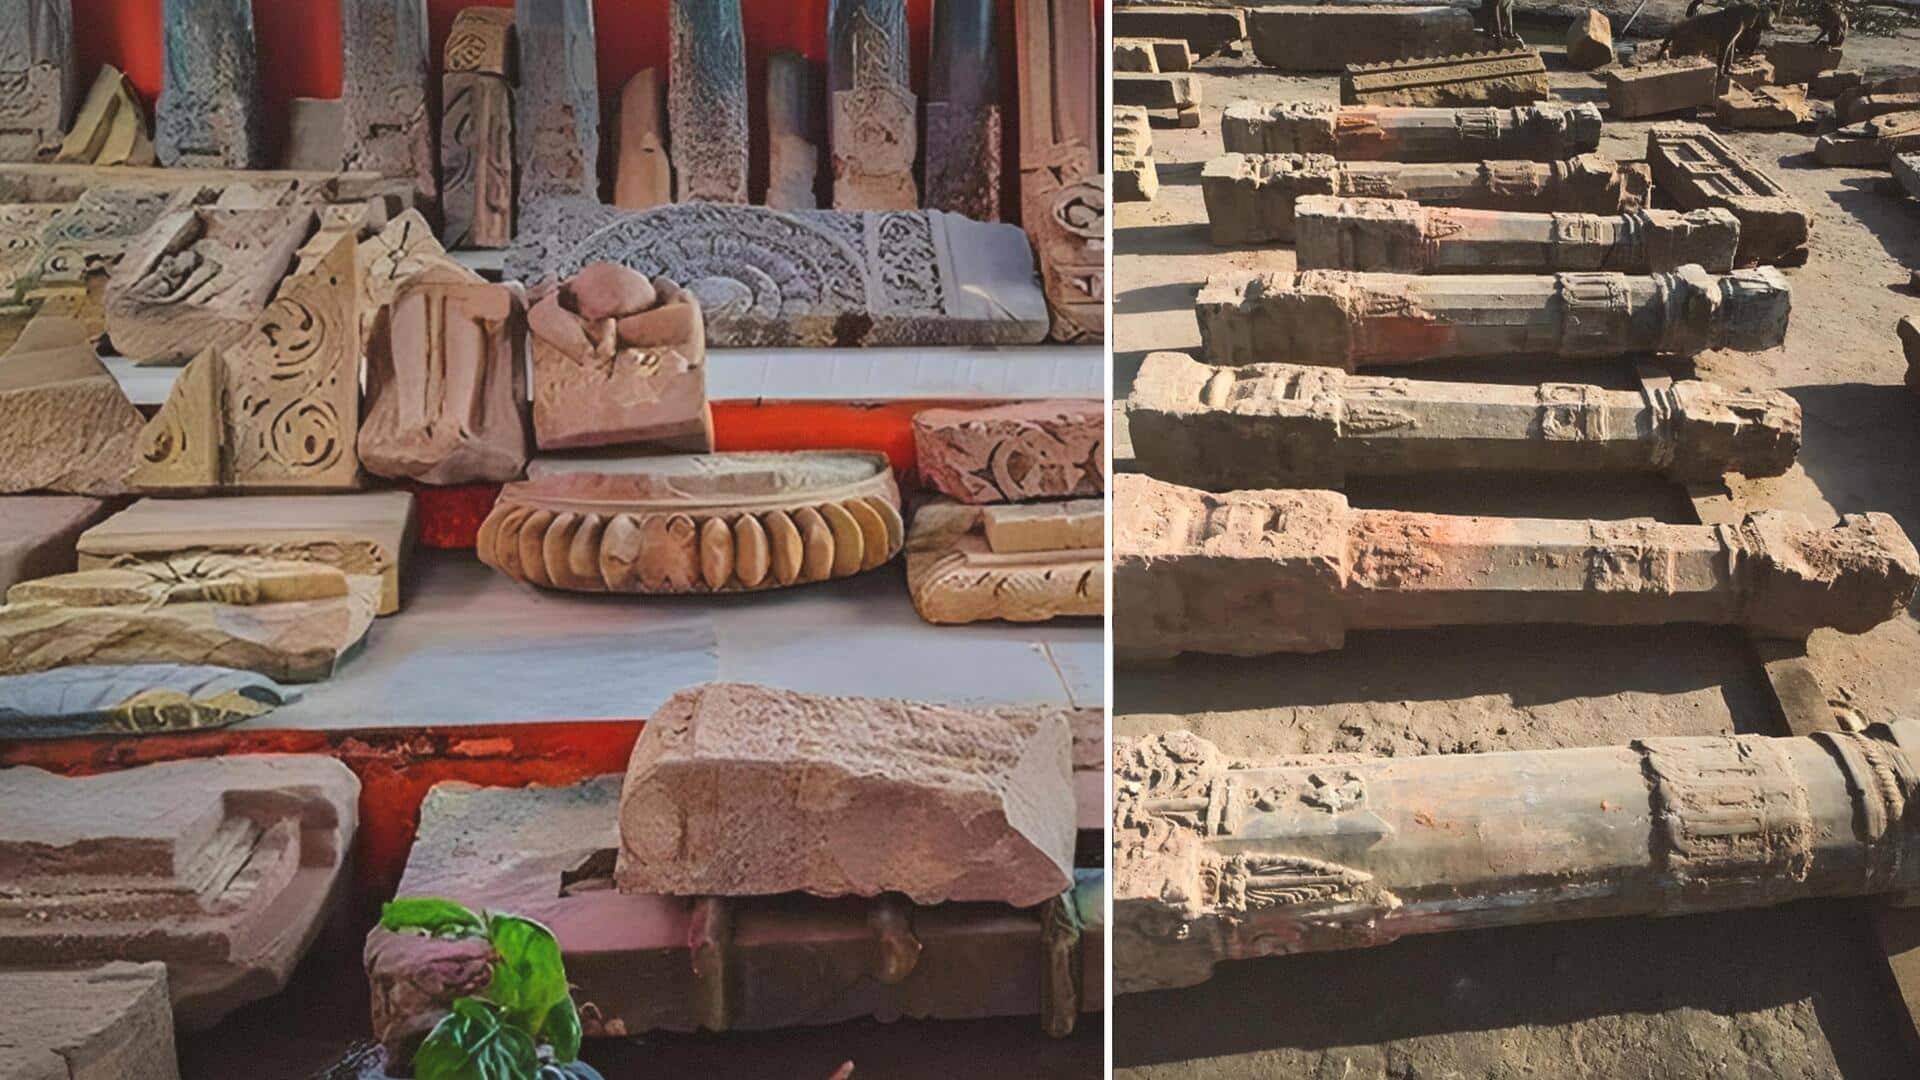 Ram Mandir: Remains of ancient temple, idols, and pillars found